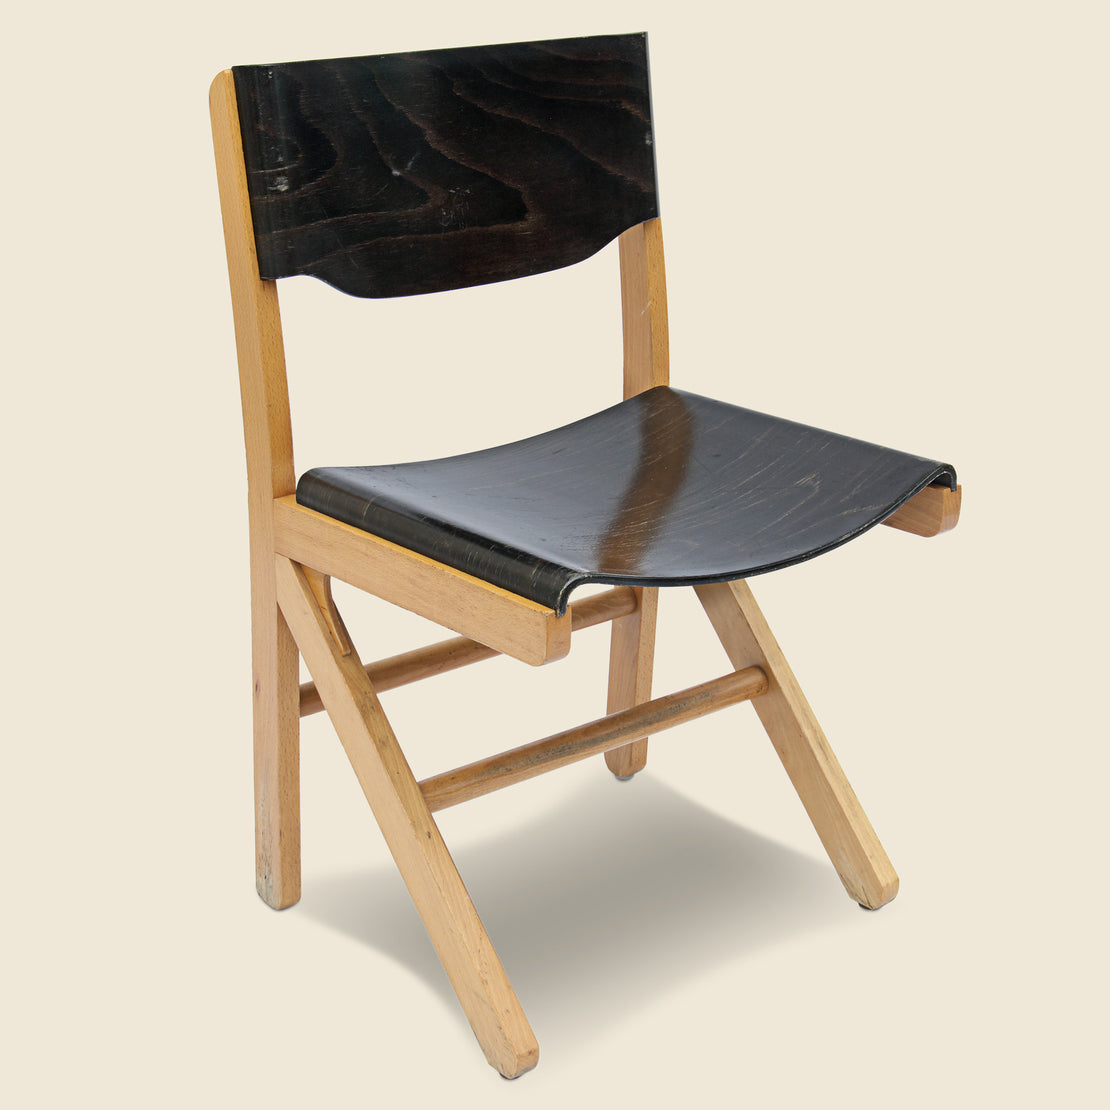 Vintage English Industrial Plywood Chair - Black